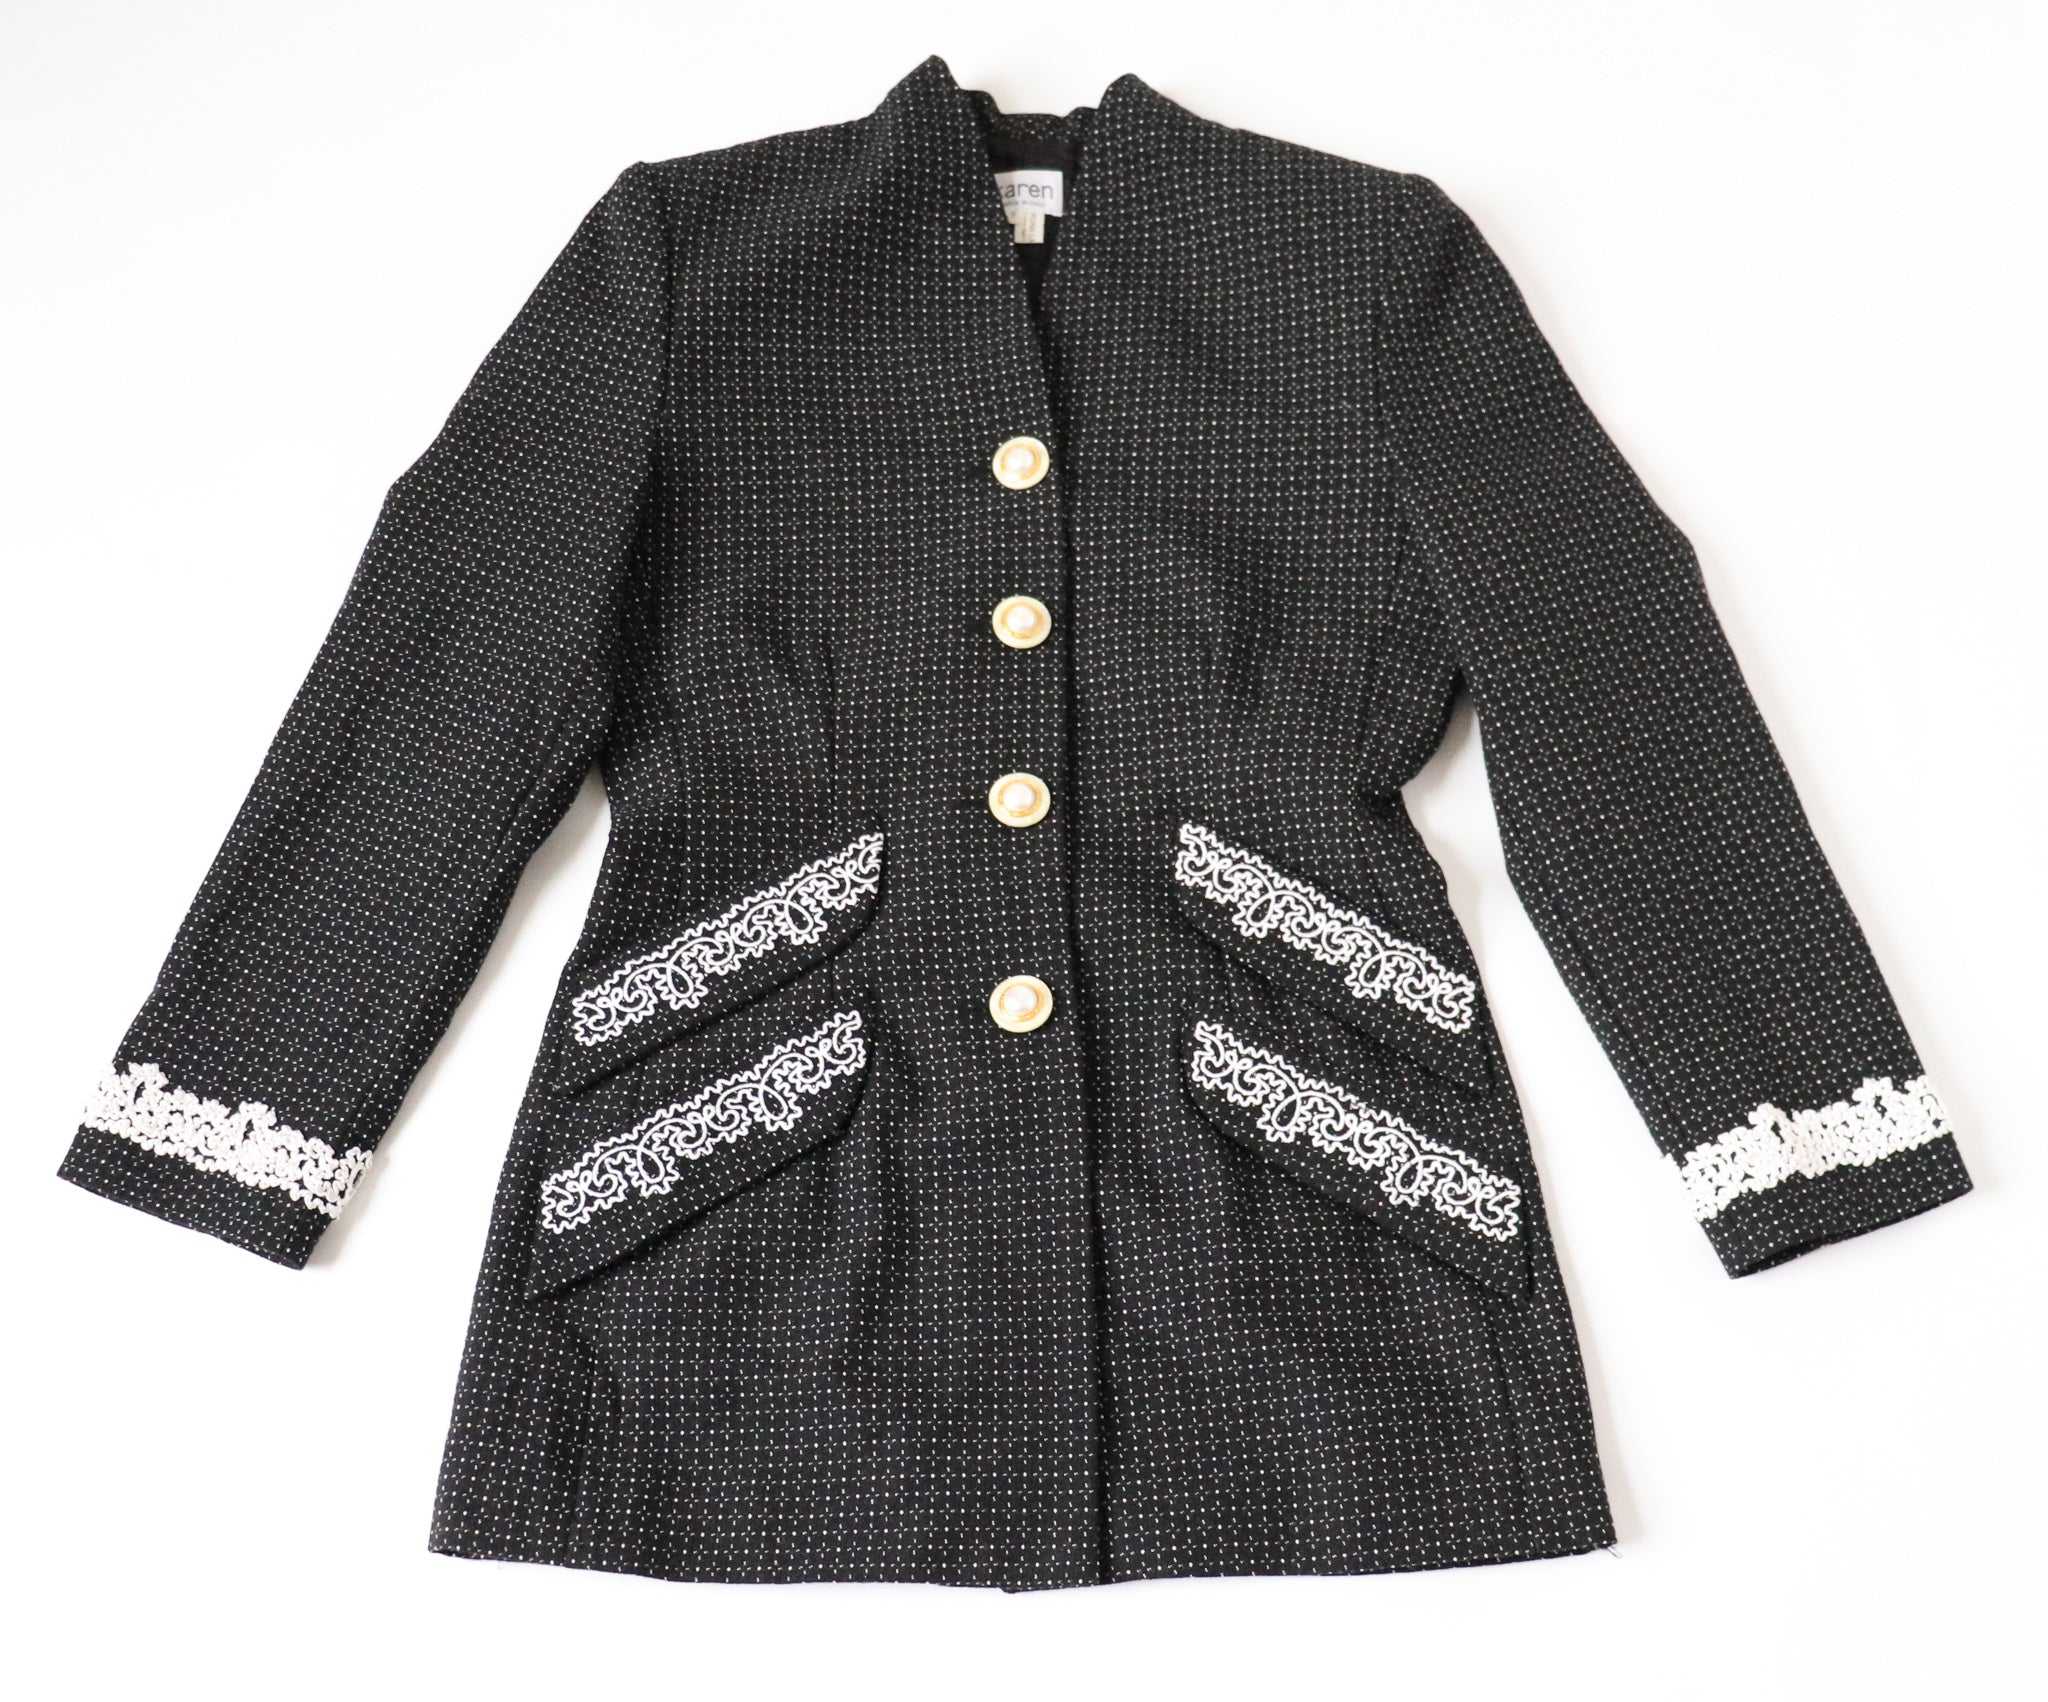 Karen Collarless Suit Jacket - Woven Wool - Black Spotted - XS / S - UK 8 / 10